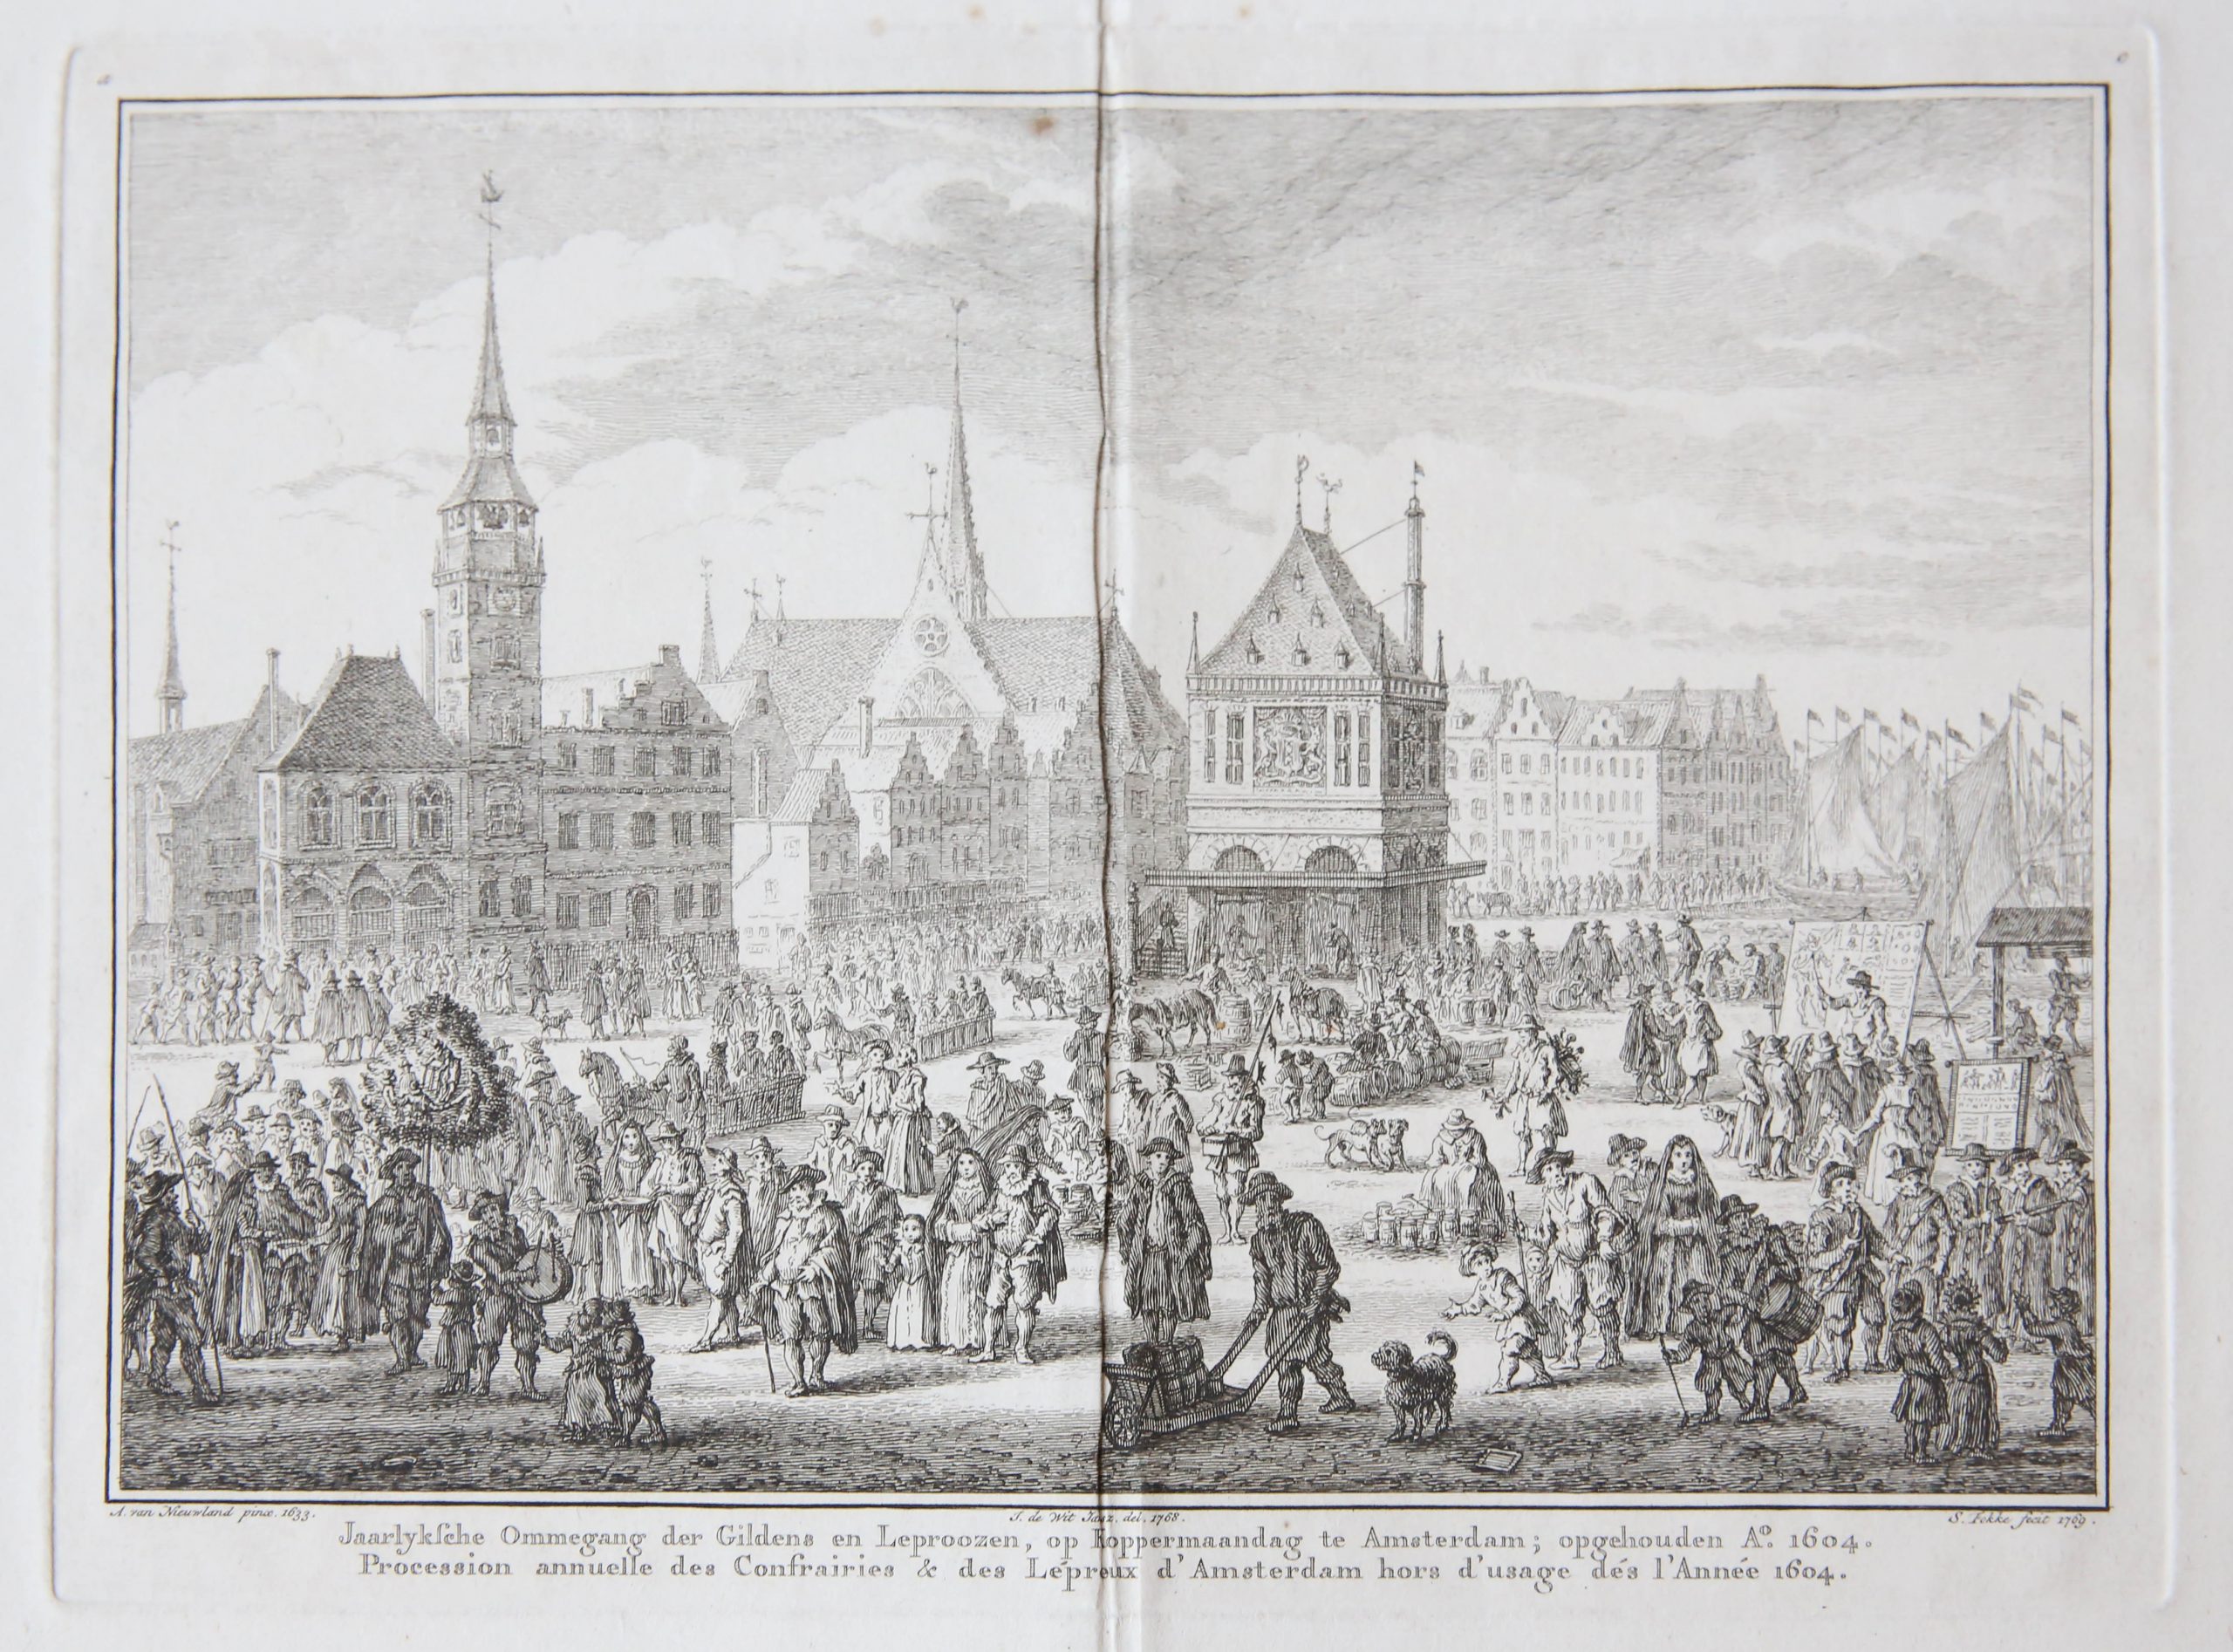 [Antique print, etching/ets] 'Jaarlyksche Ommegang der Gildens en Leproozen'; Procession of guild members and lepers in Amsterdam on 'koppermaandag' in 1604, published 1769.